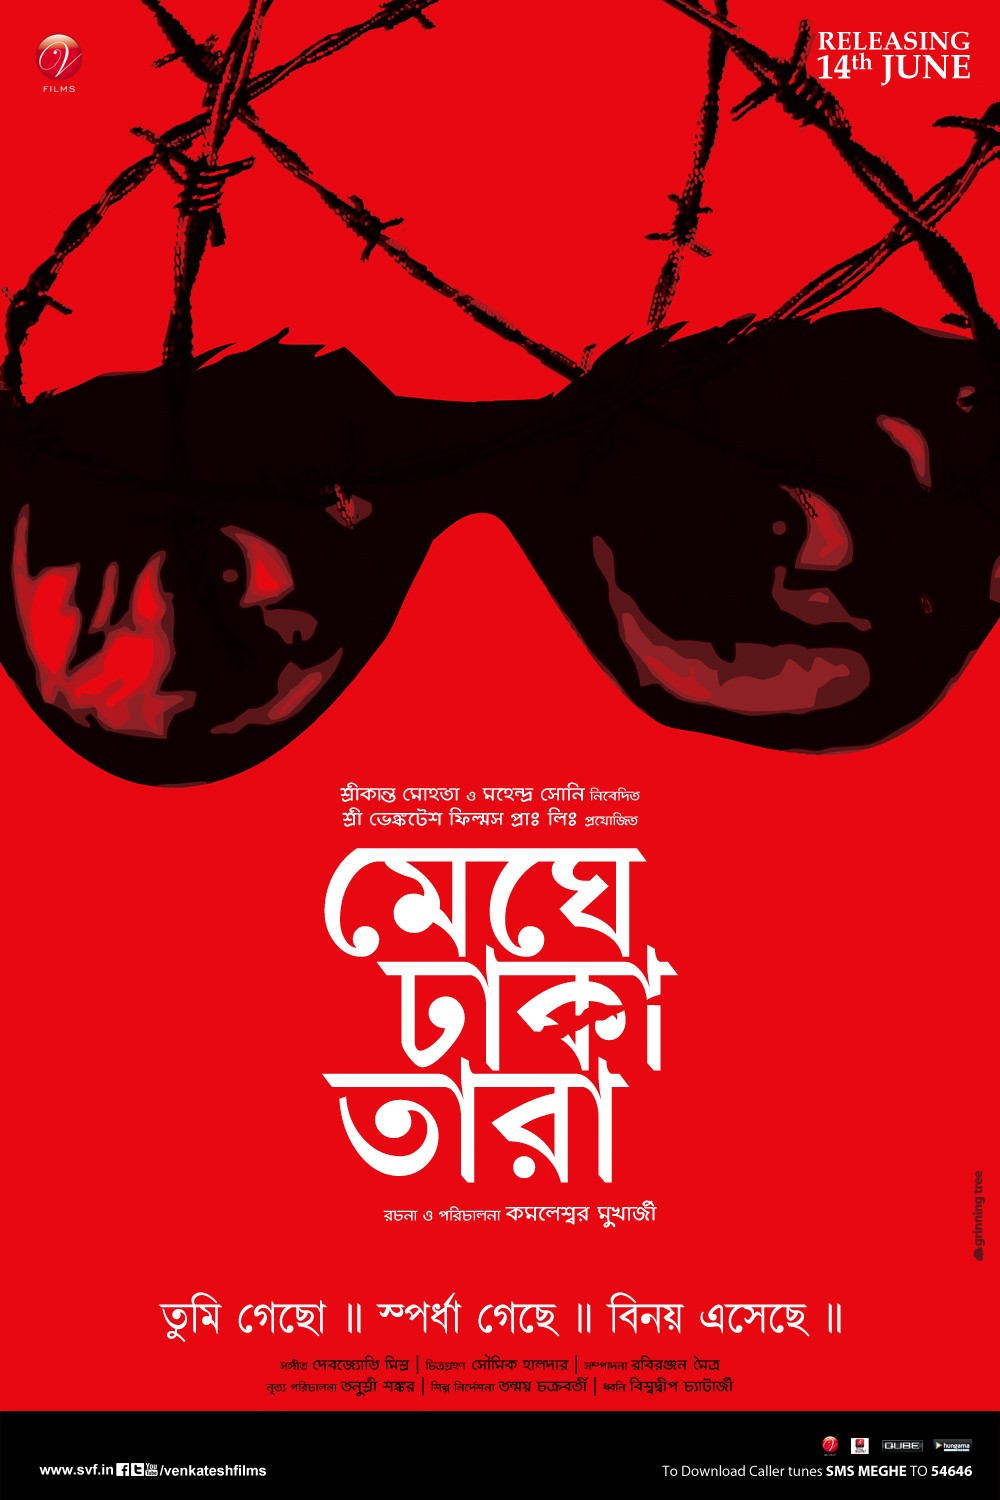 Extra Large Movie Poster Image for Meghe Dhaka Tara (#1 of 7)